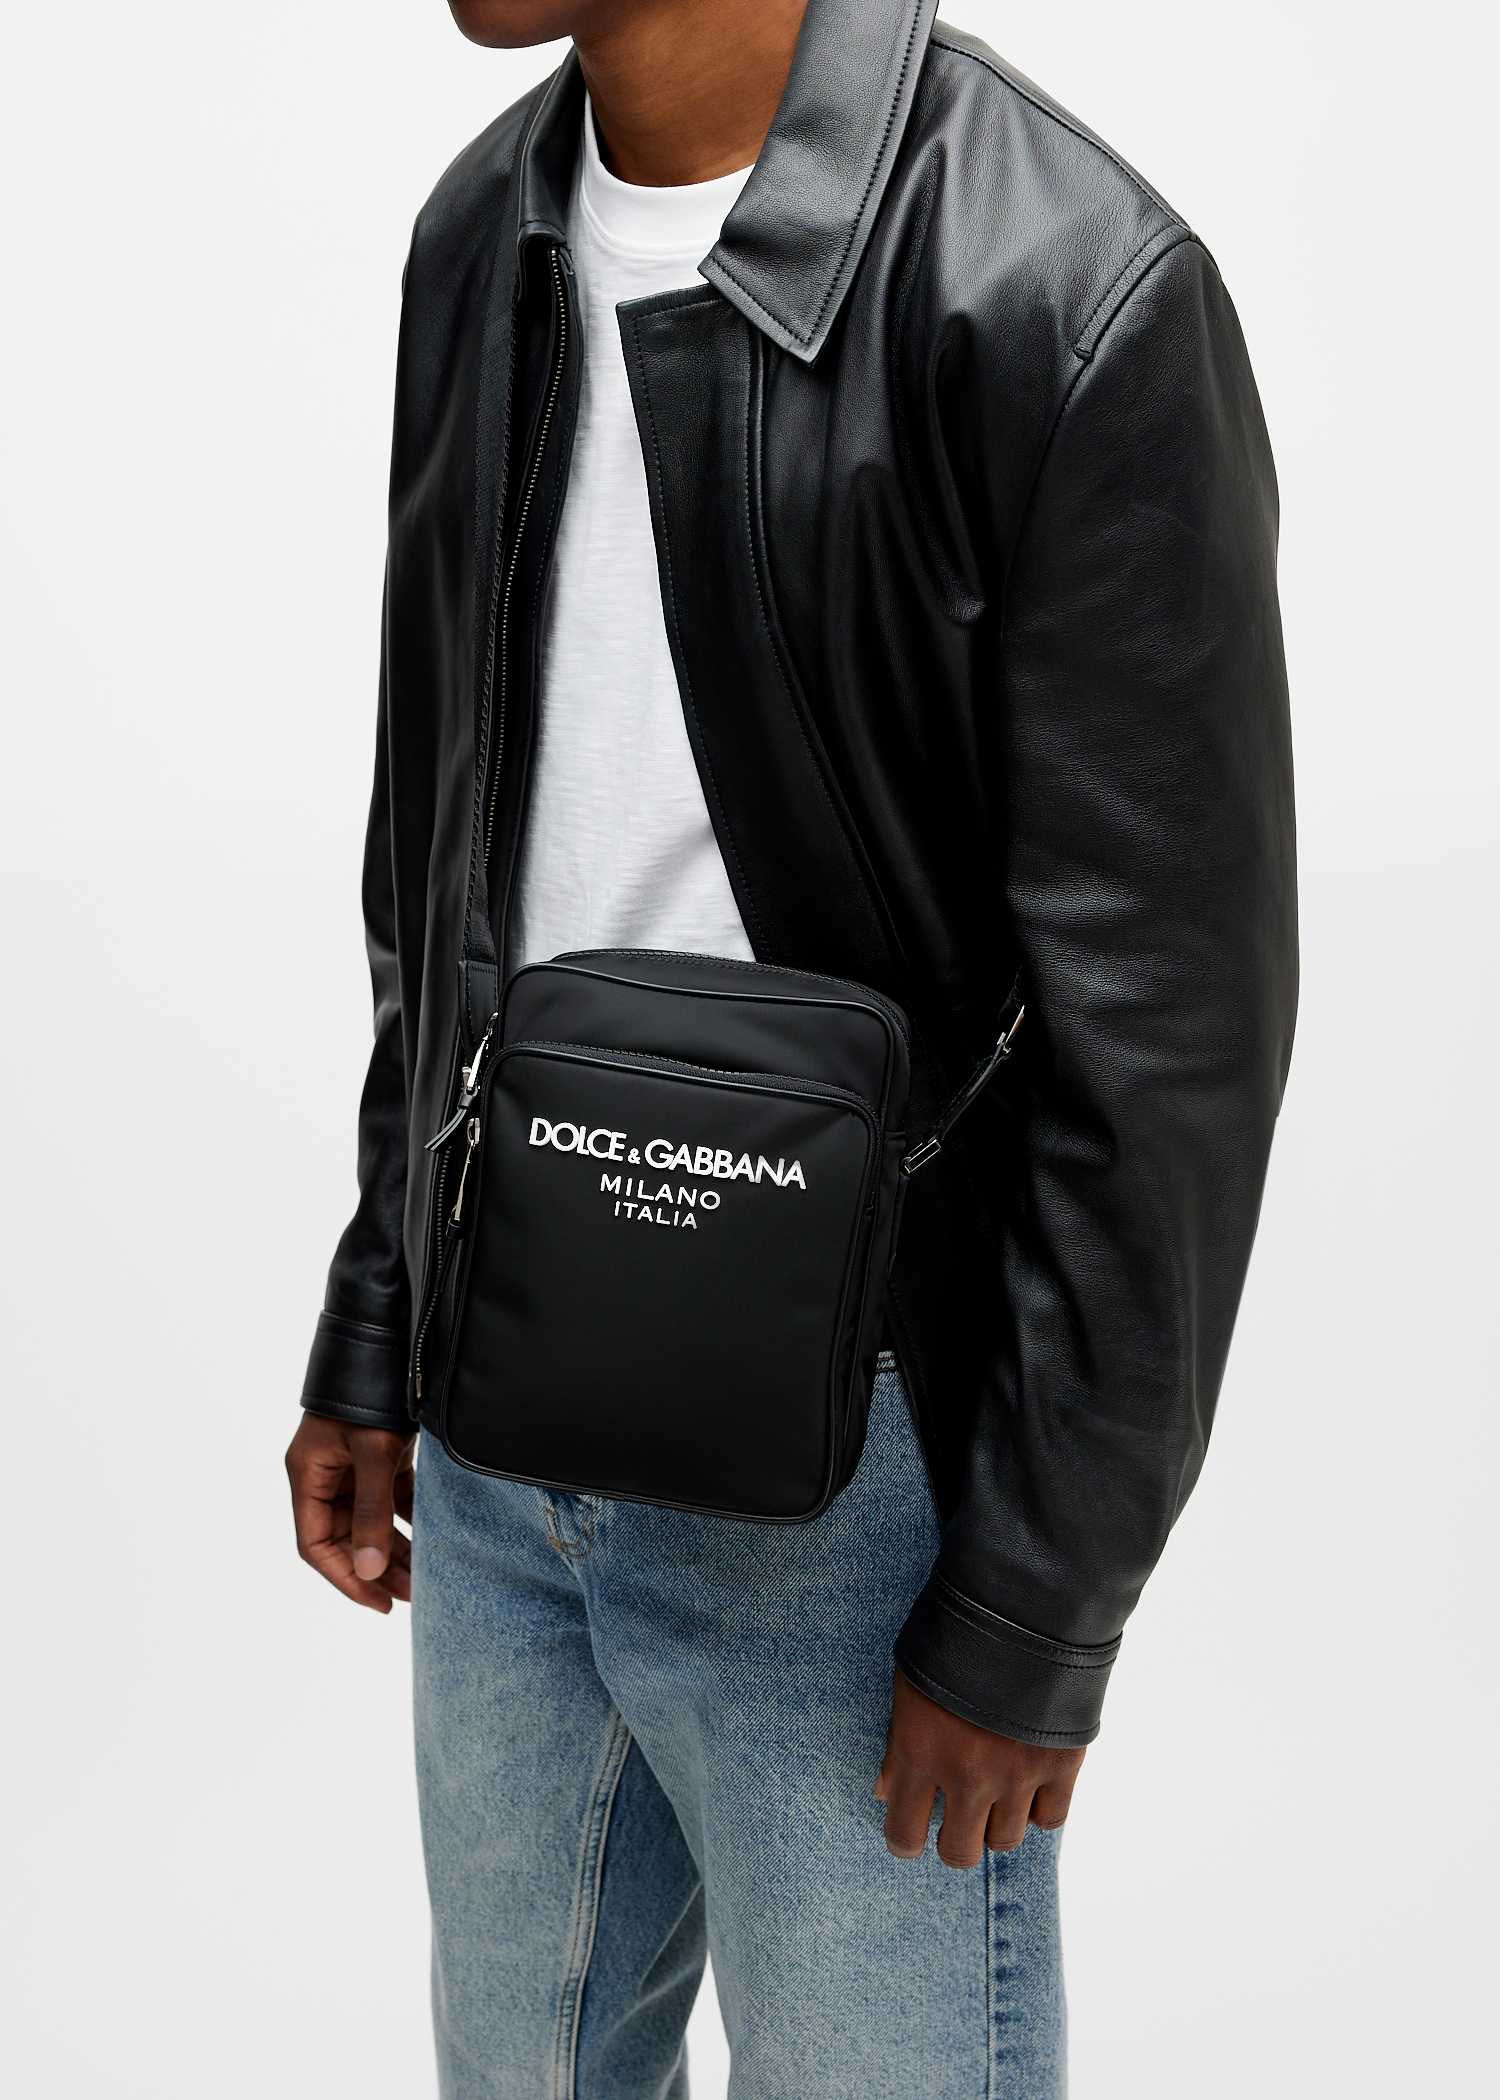 Dolce&Gabbana Logo nylon crossbody bag for Men - Black in UAE